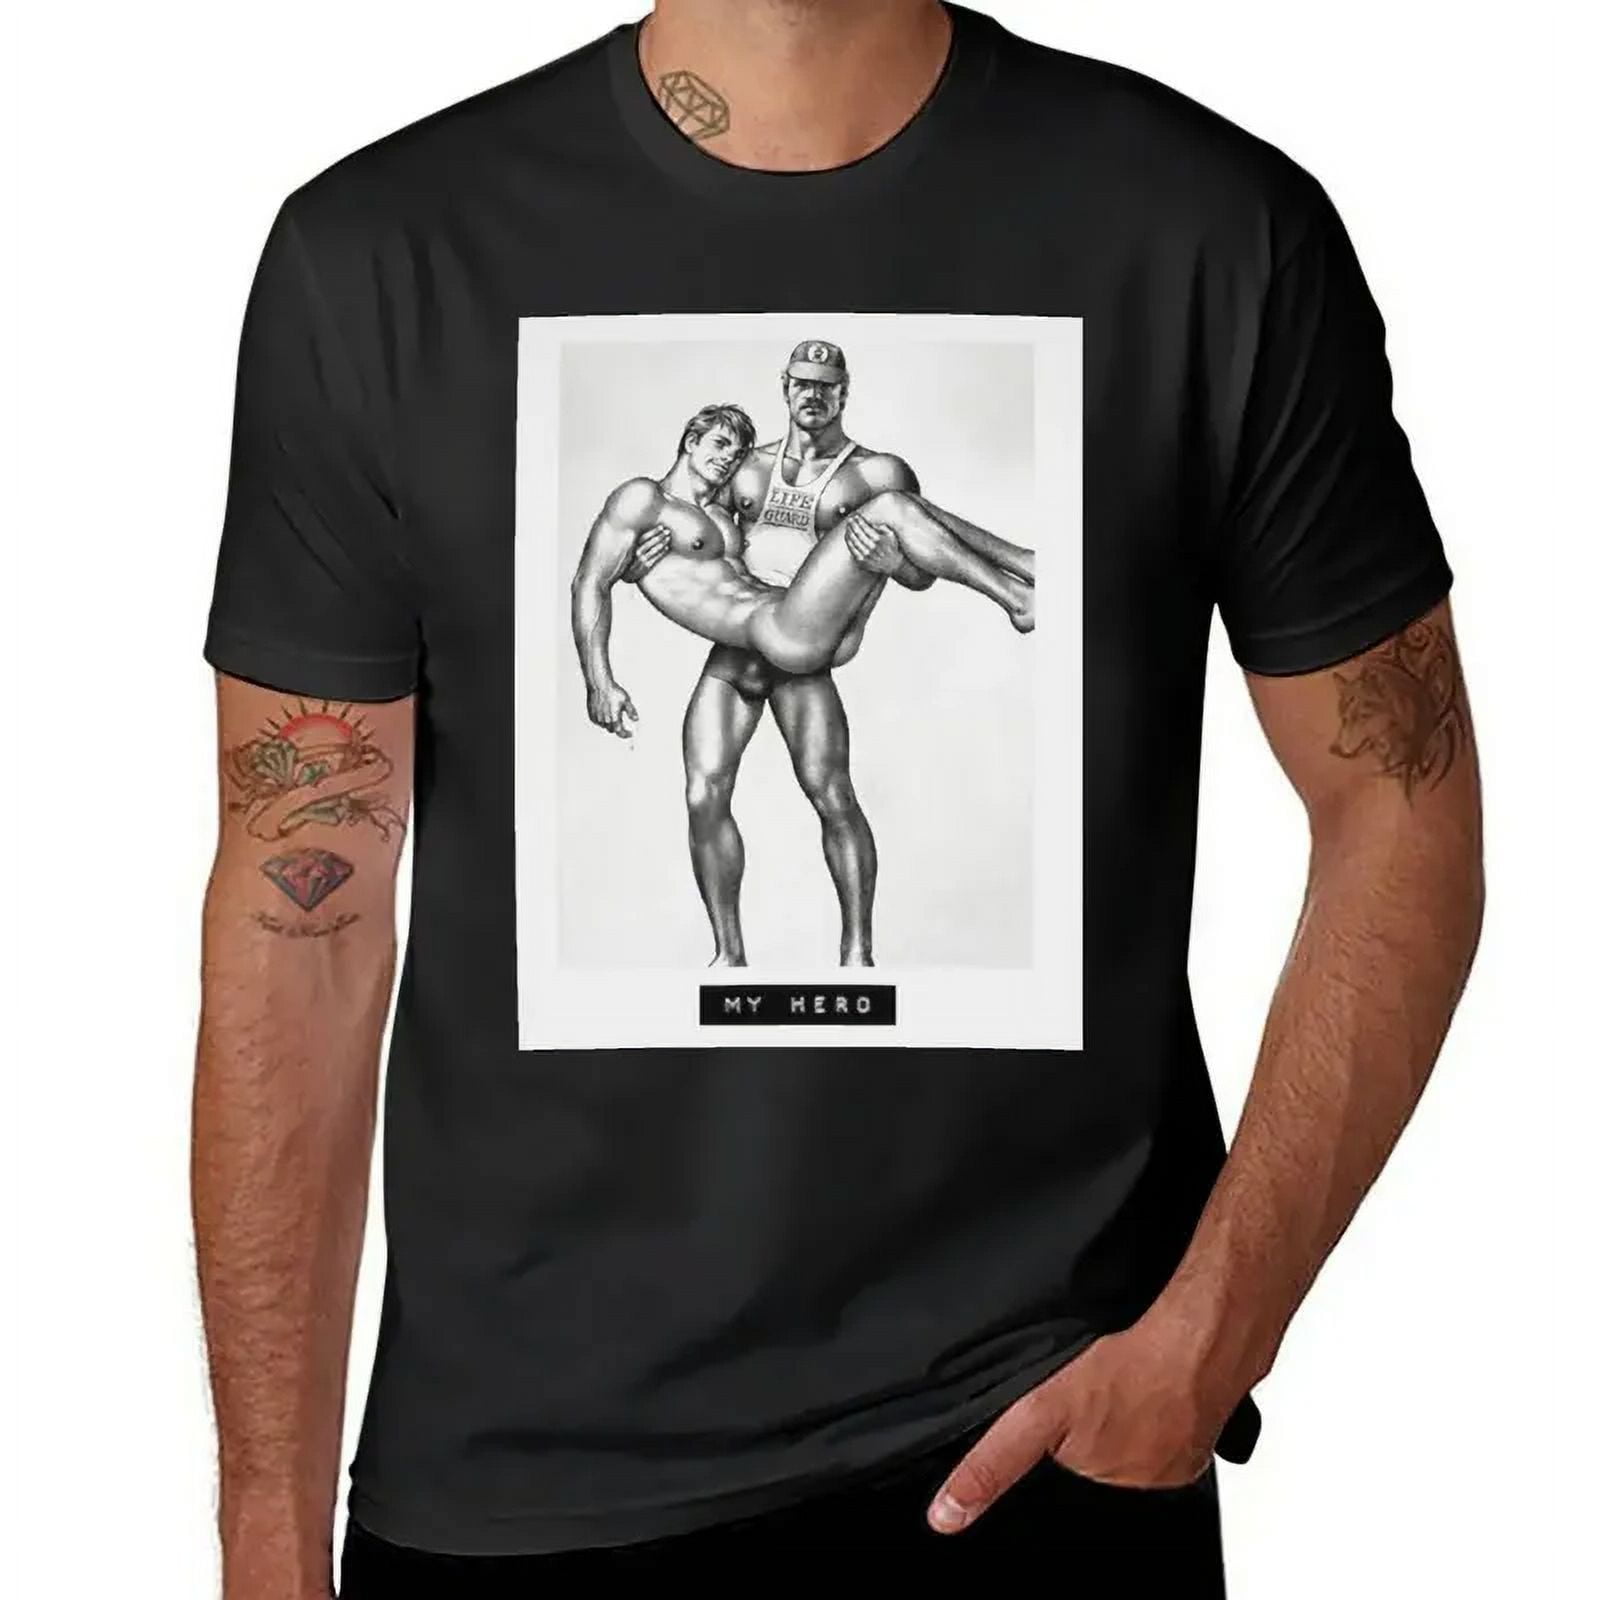 My Hero (Tom of Finland) T-Shirt blanks oversized summer top mens ...